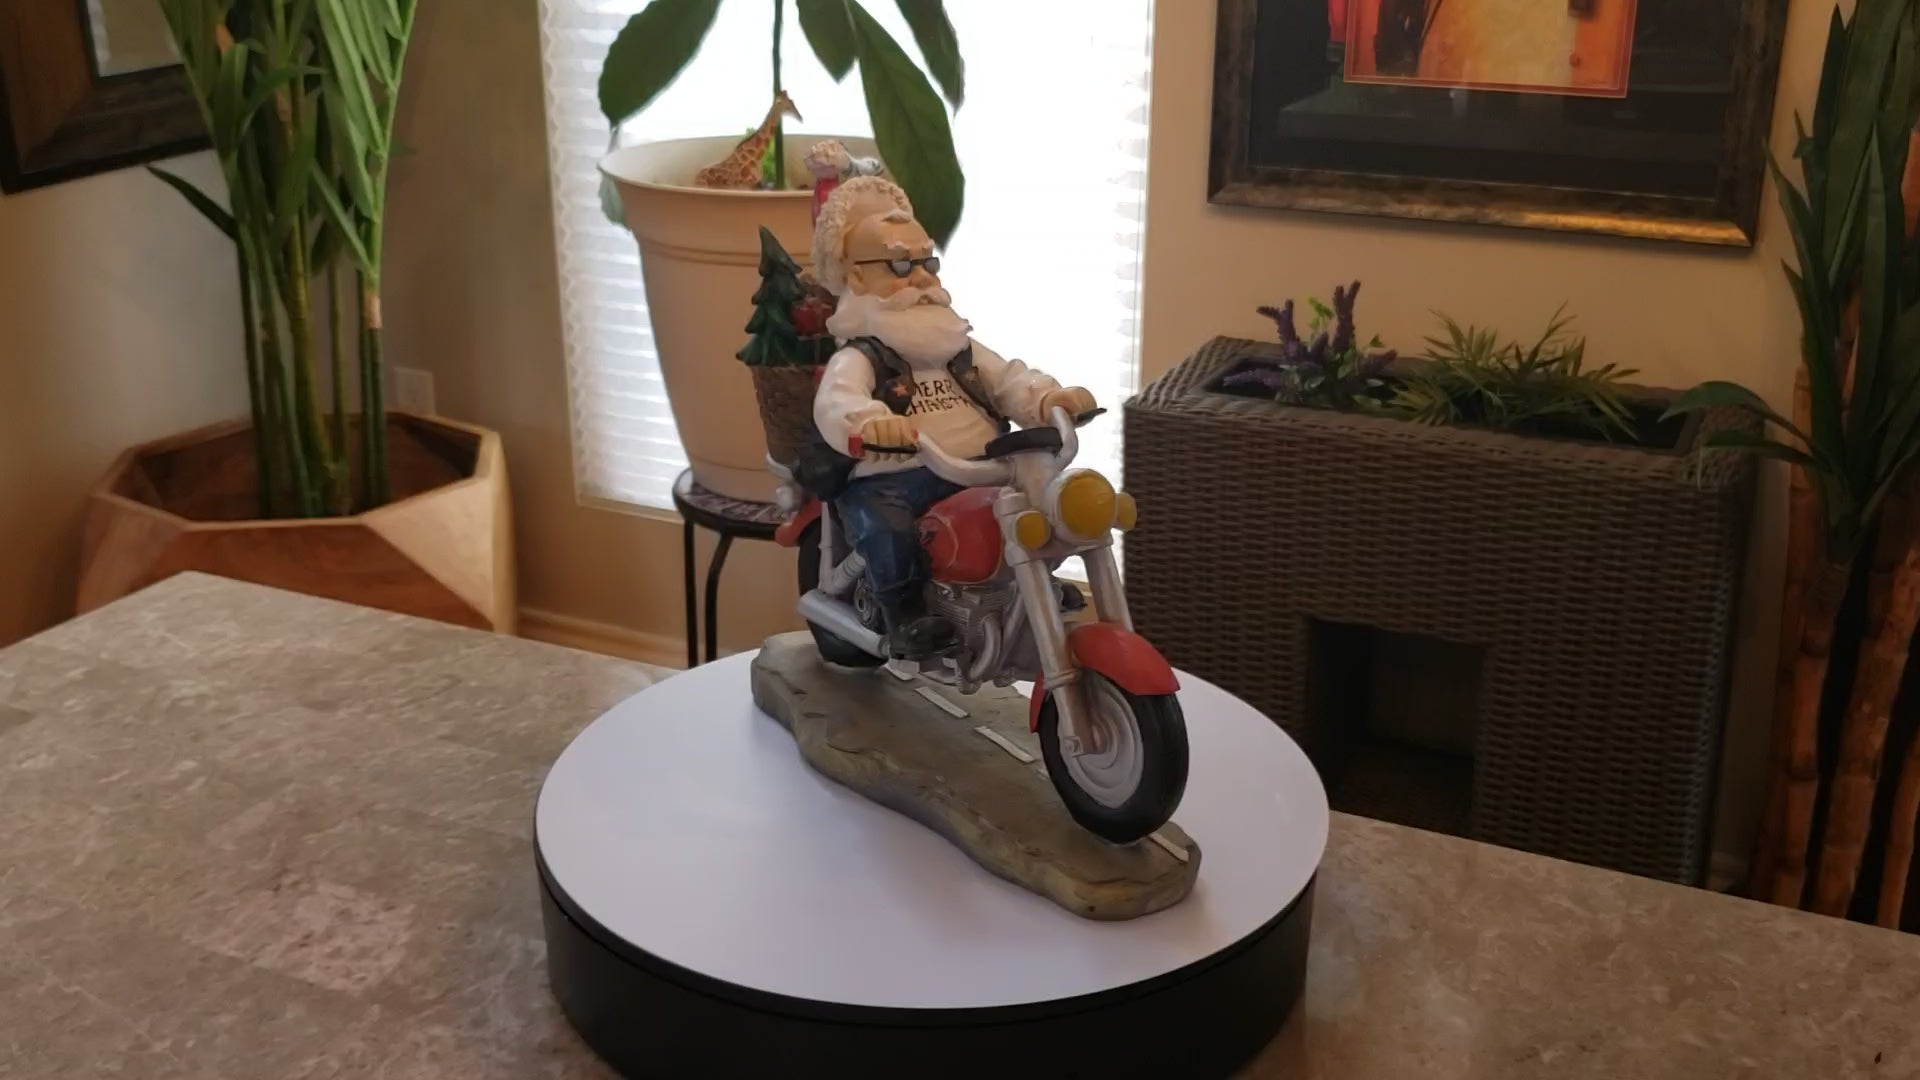 Auction for sale riding Santa gnome statue